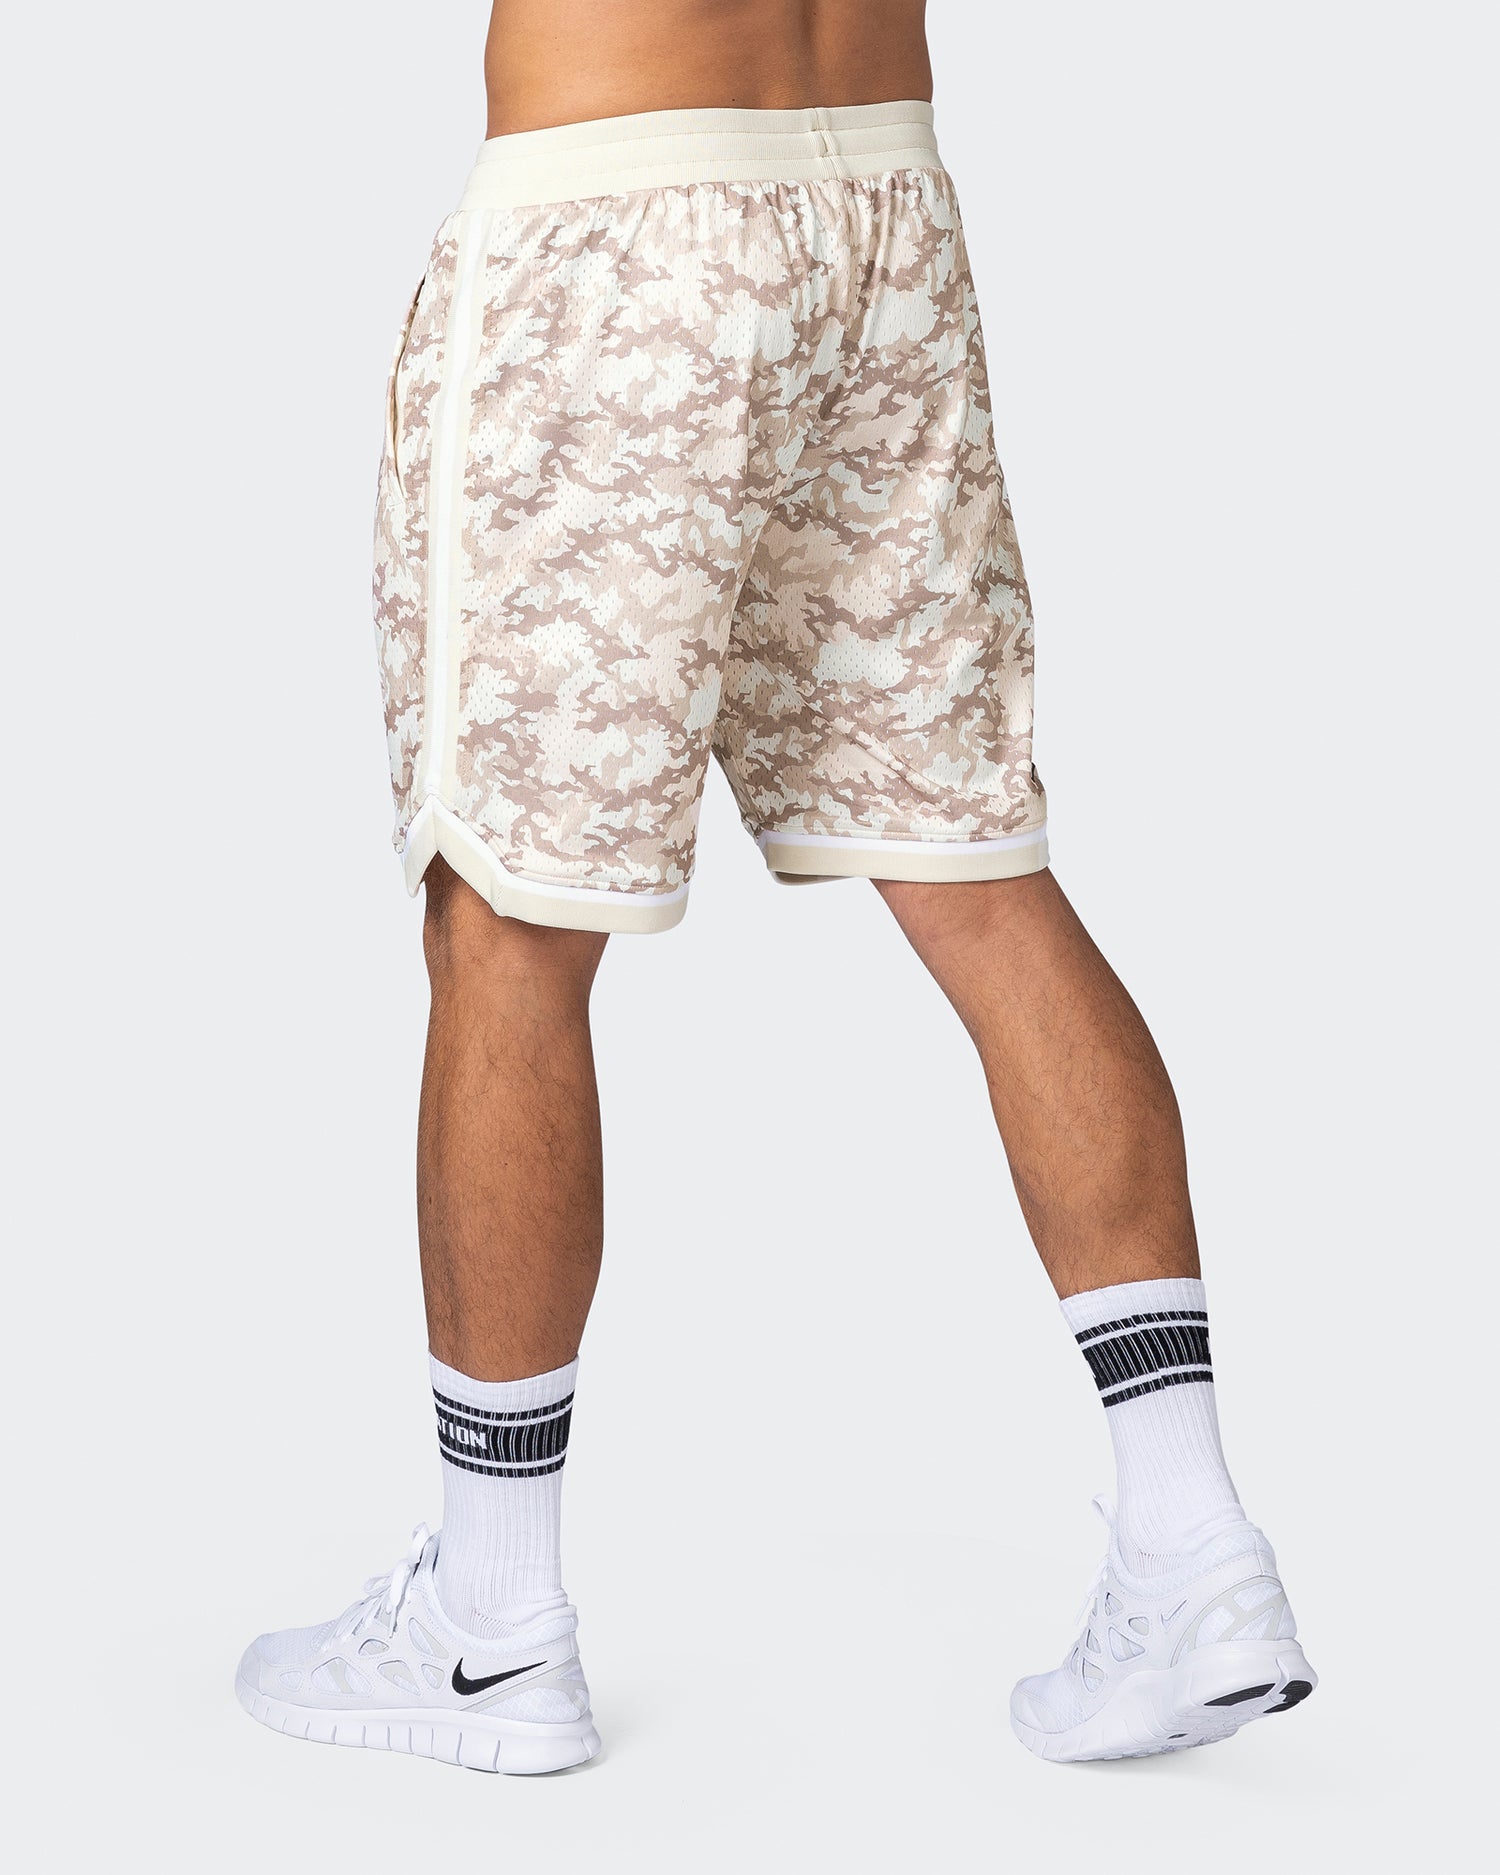 8" Basketball Shorts - Beige Camo Print